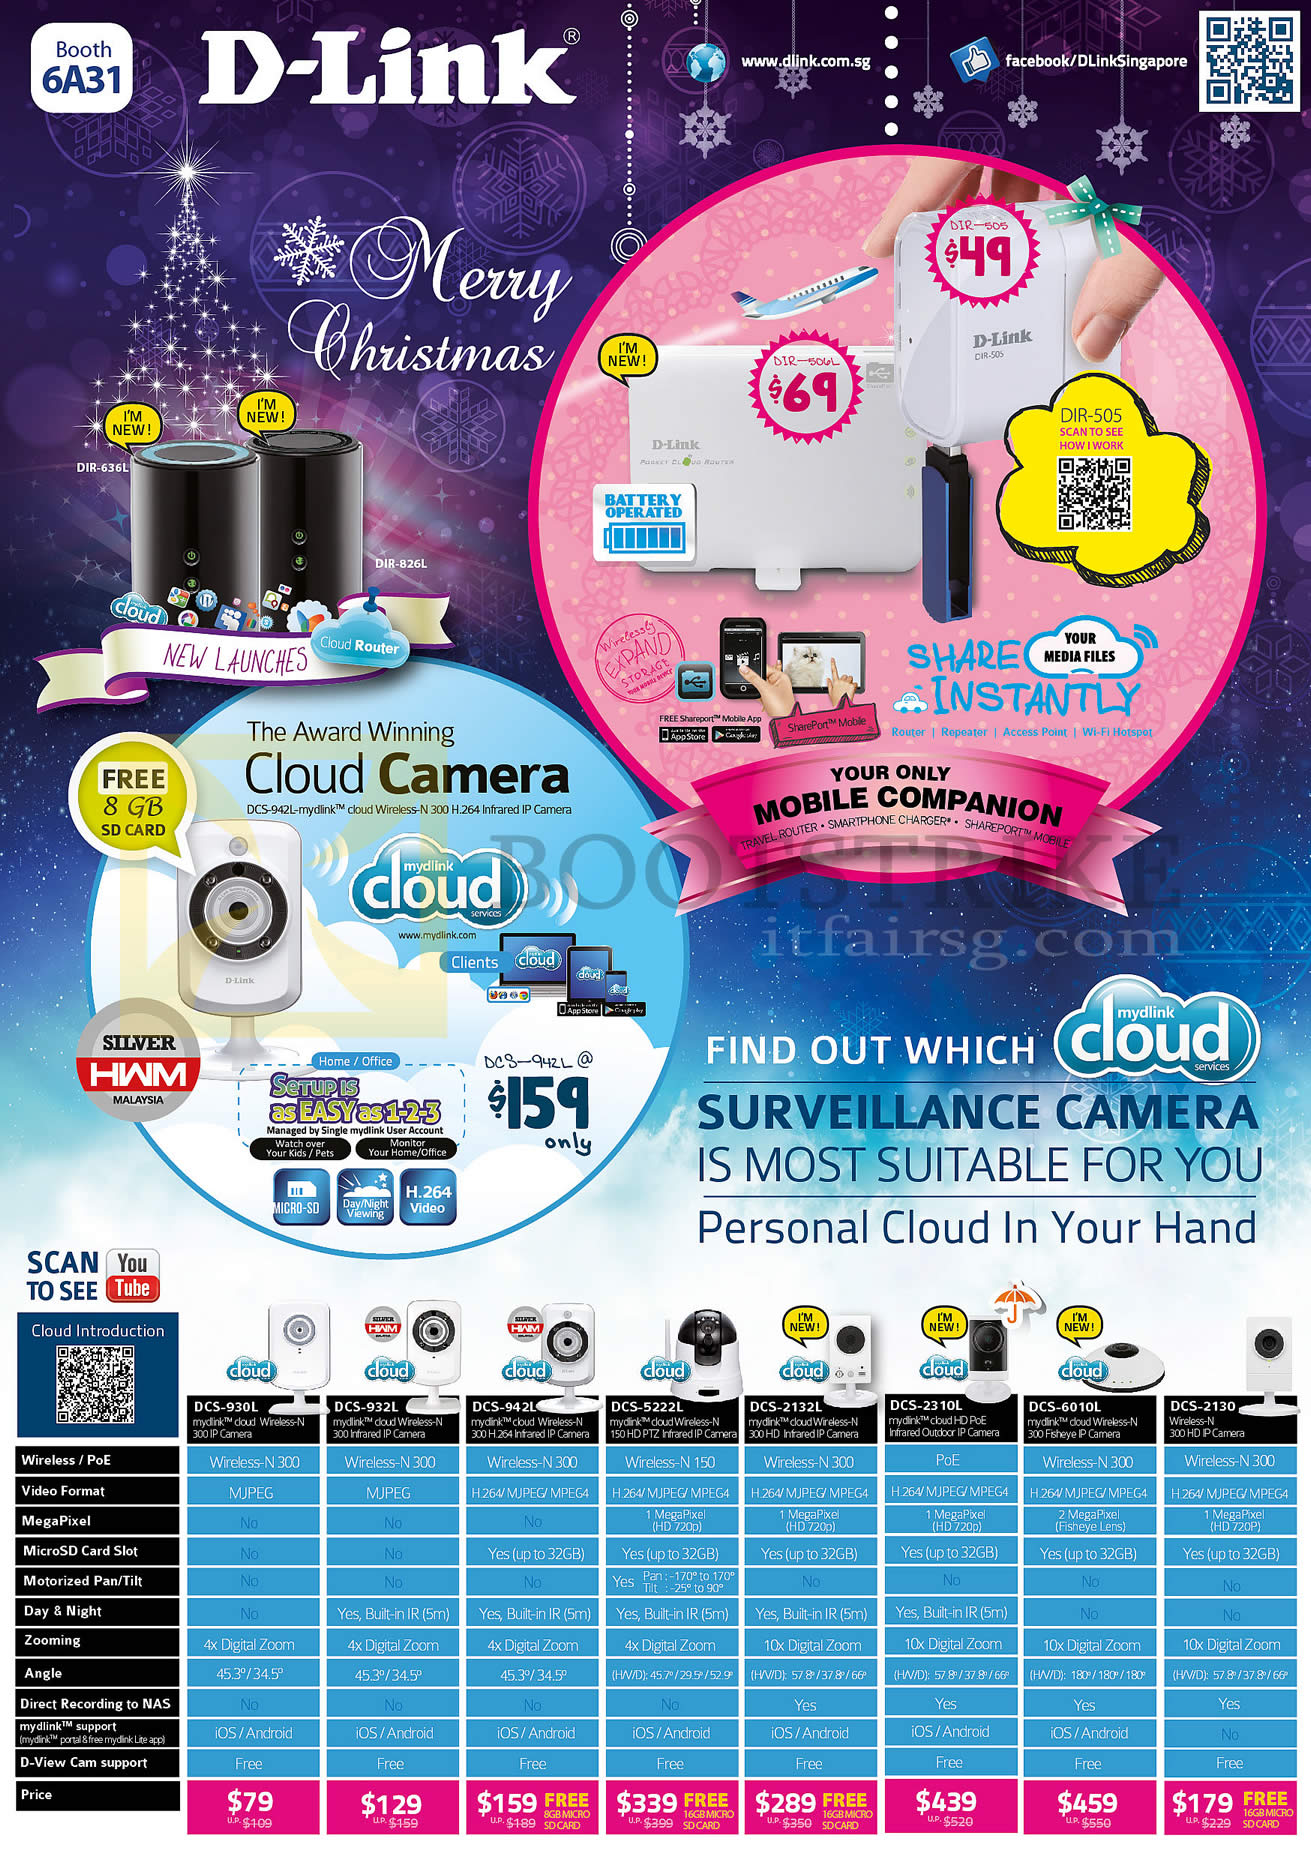 SITEX 2012 price list image brochure of D-Link Networking Router, IPCam, DSC 930L, 932L, 942L, 5222L, 2132L, 2310L, 6010L, 2130